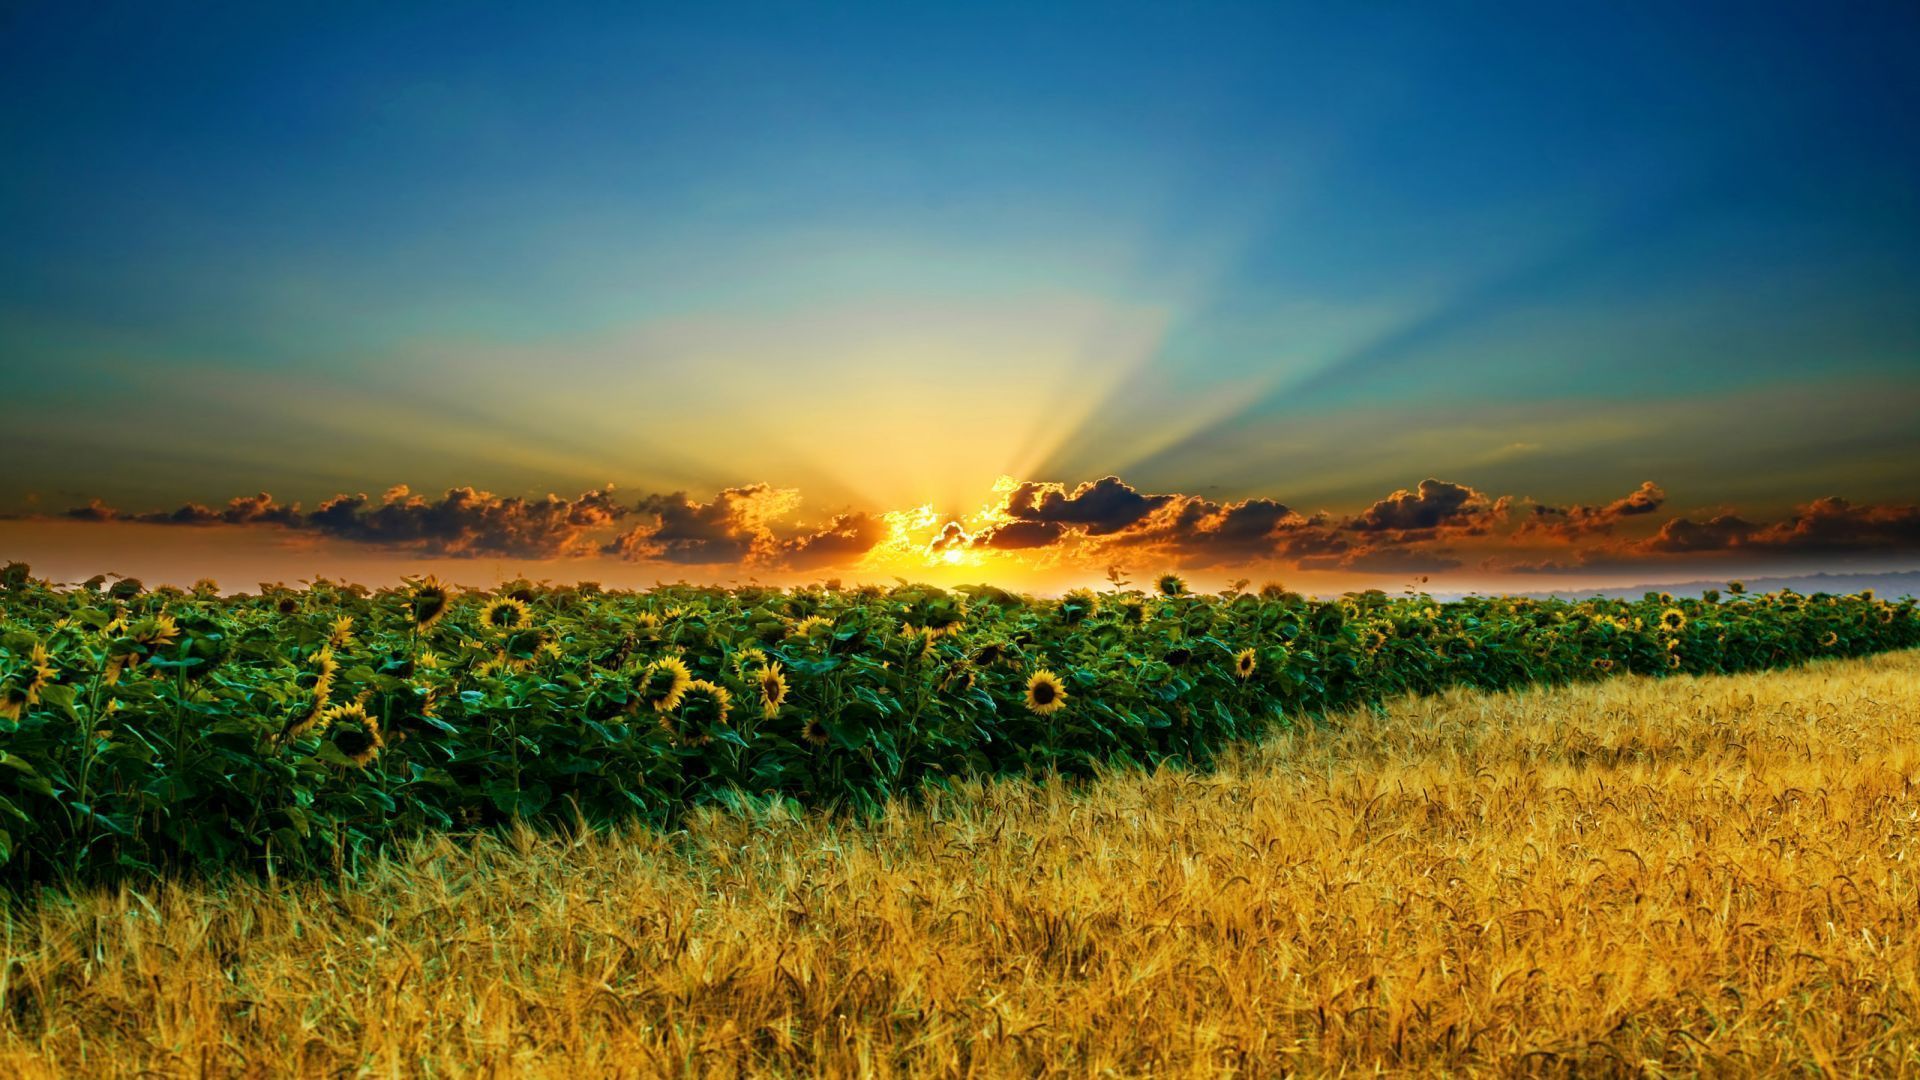 Sunshine over the Sunflower Field, Desktop Wallpaper #4235642 ...